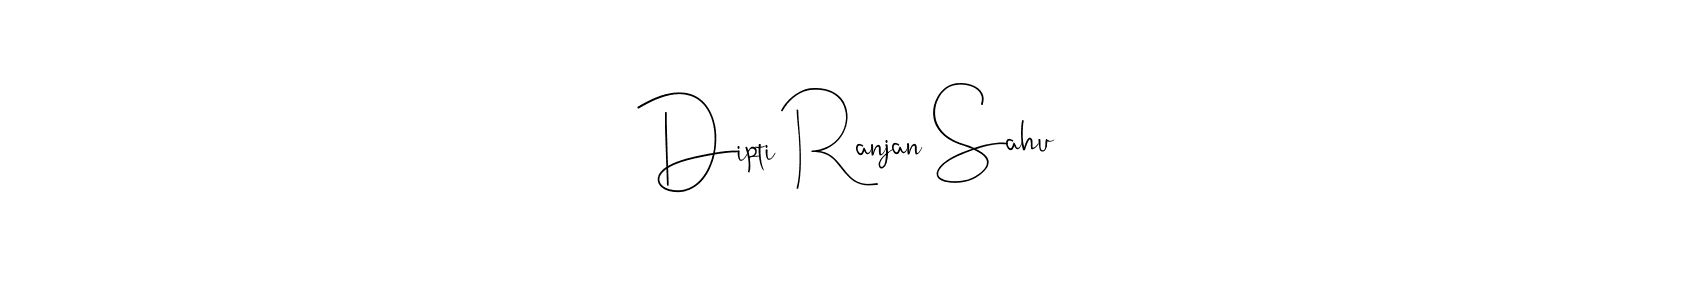 Make a beautiful signature design for name Dipti Ranjan Sahu. Use this online signature maker to create a handwritten signature for free. Dipti Ranjan Sahu signature style 4 images and pictures png